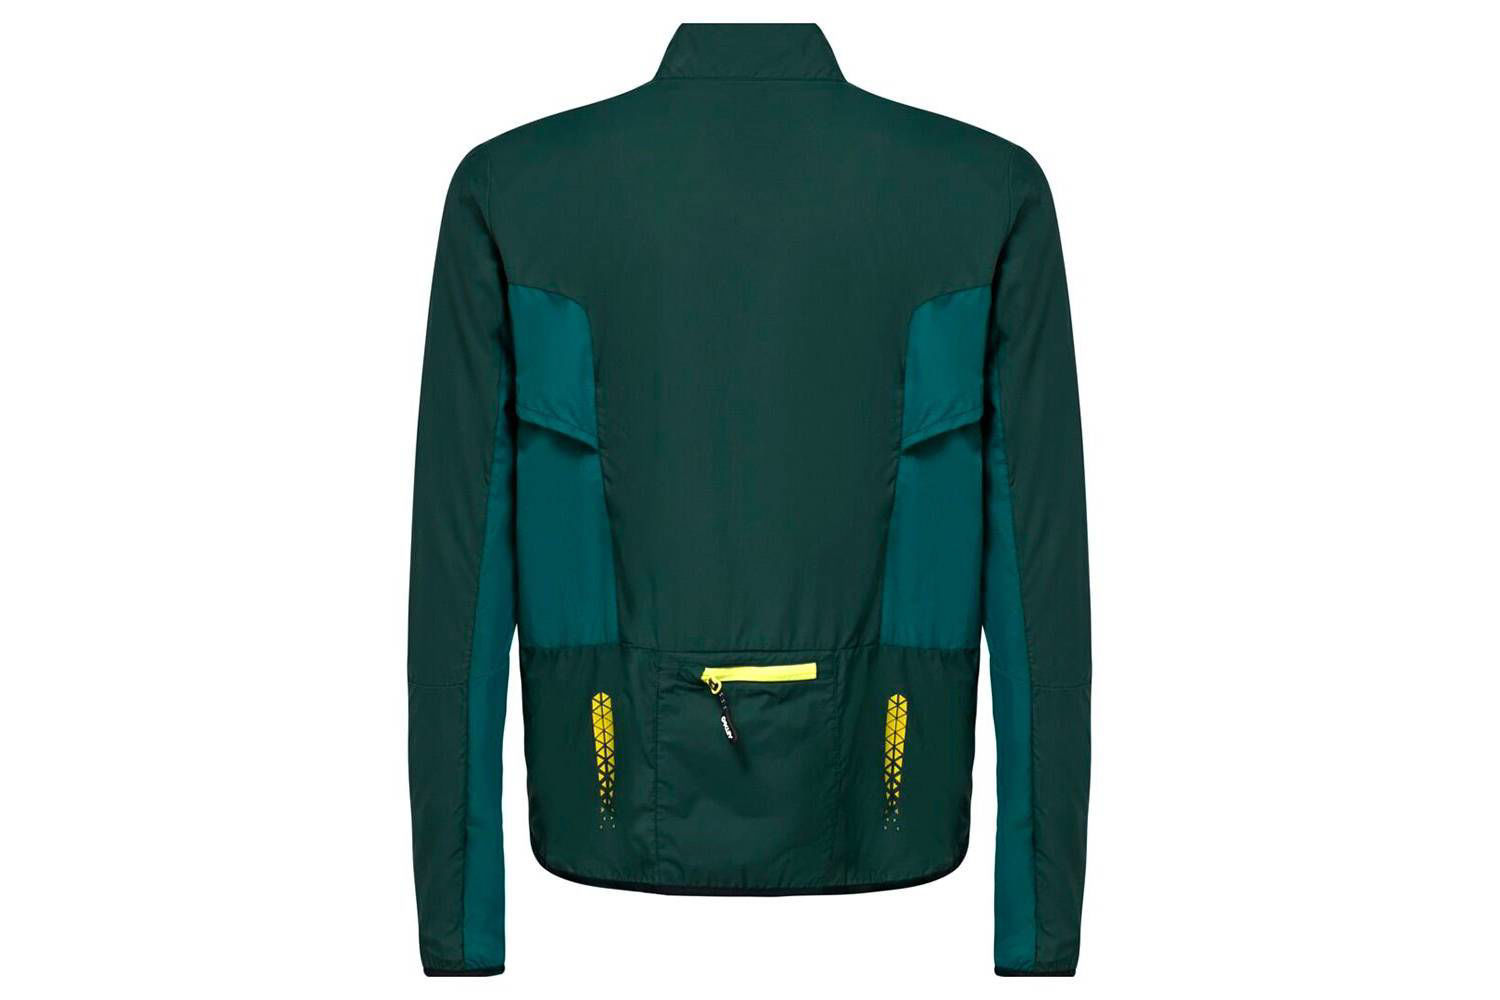 Picture of OAKLEY Elements Green Windproof Jacket